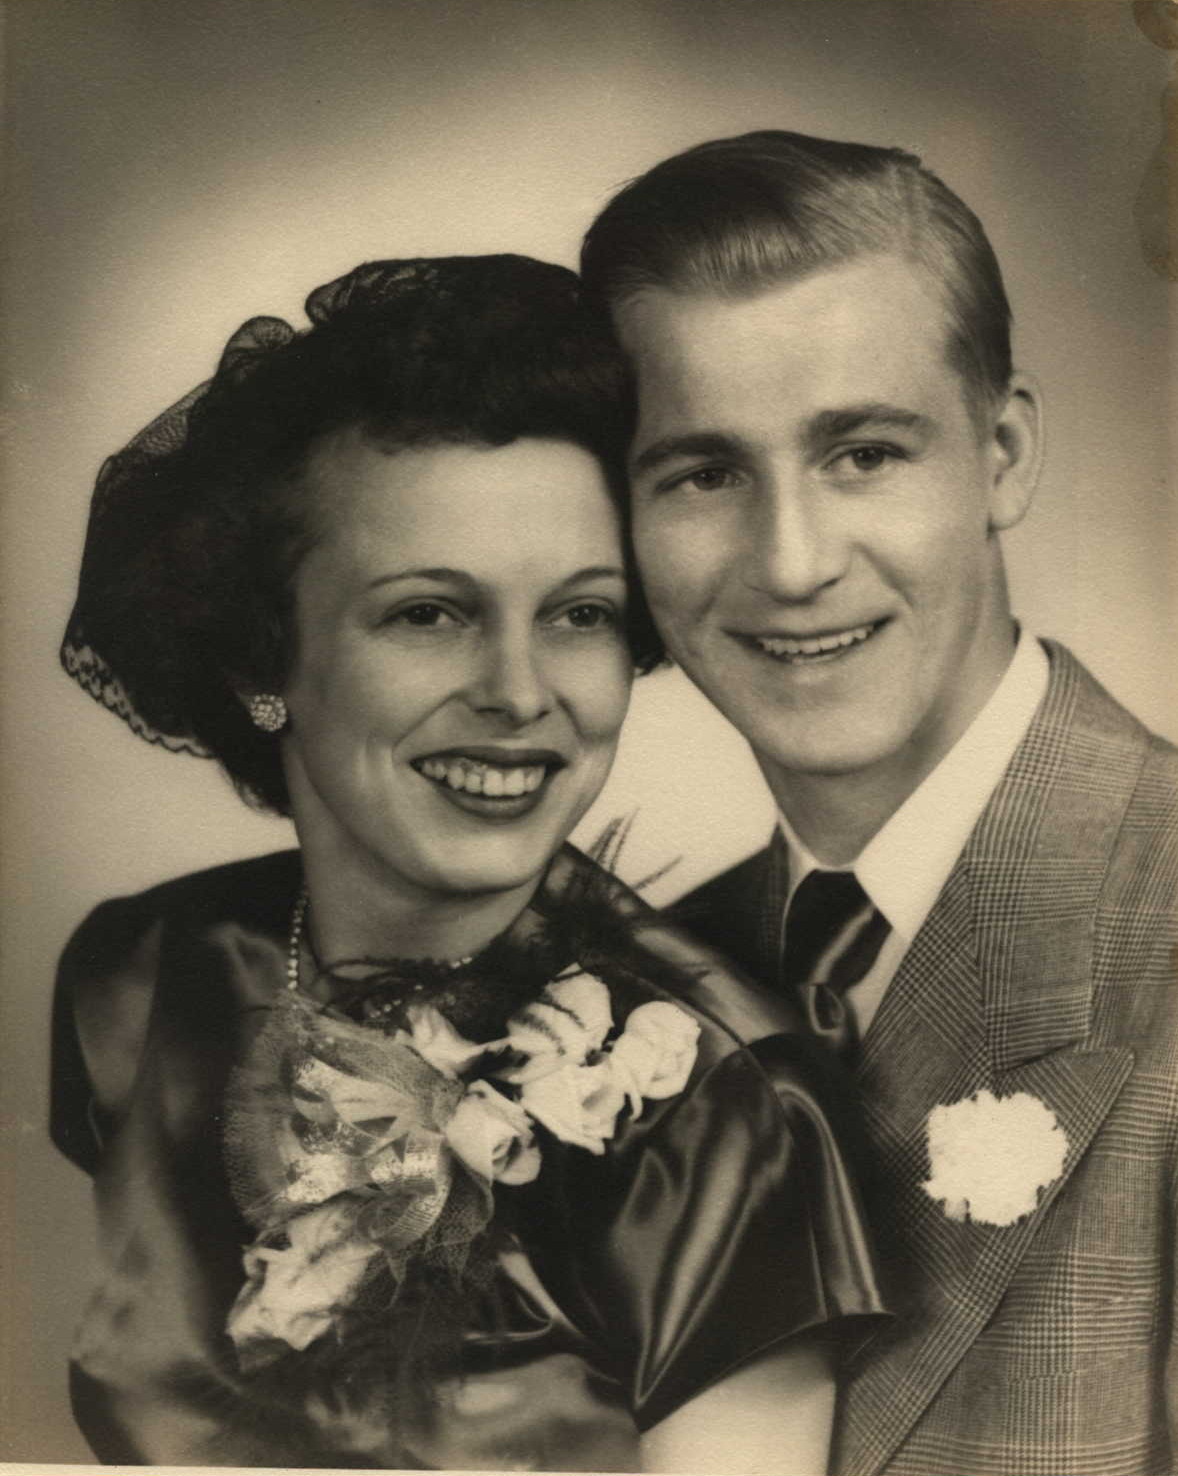 Rita and Frank Niemer, wedding day, 1948